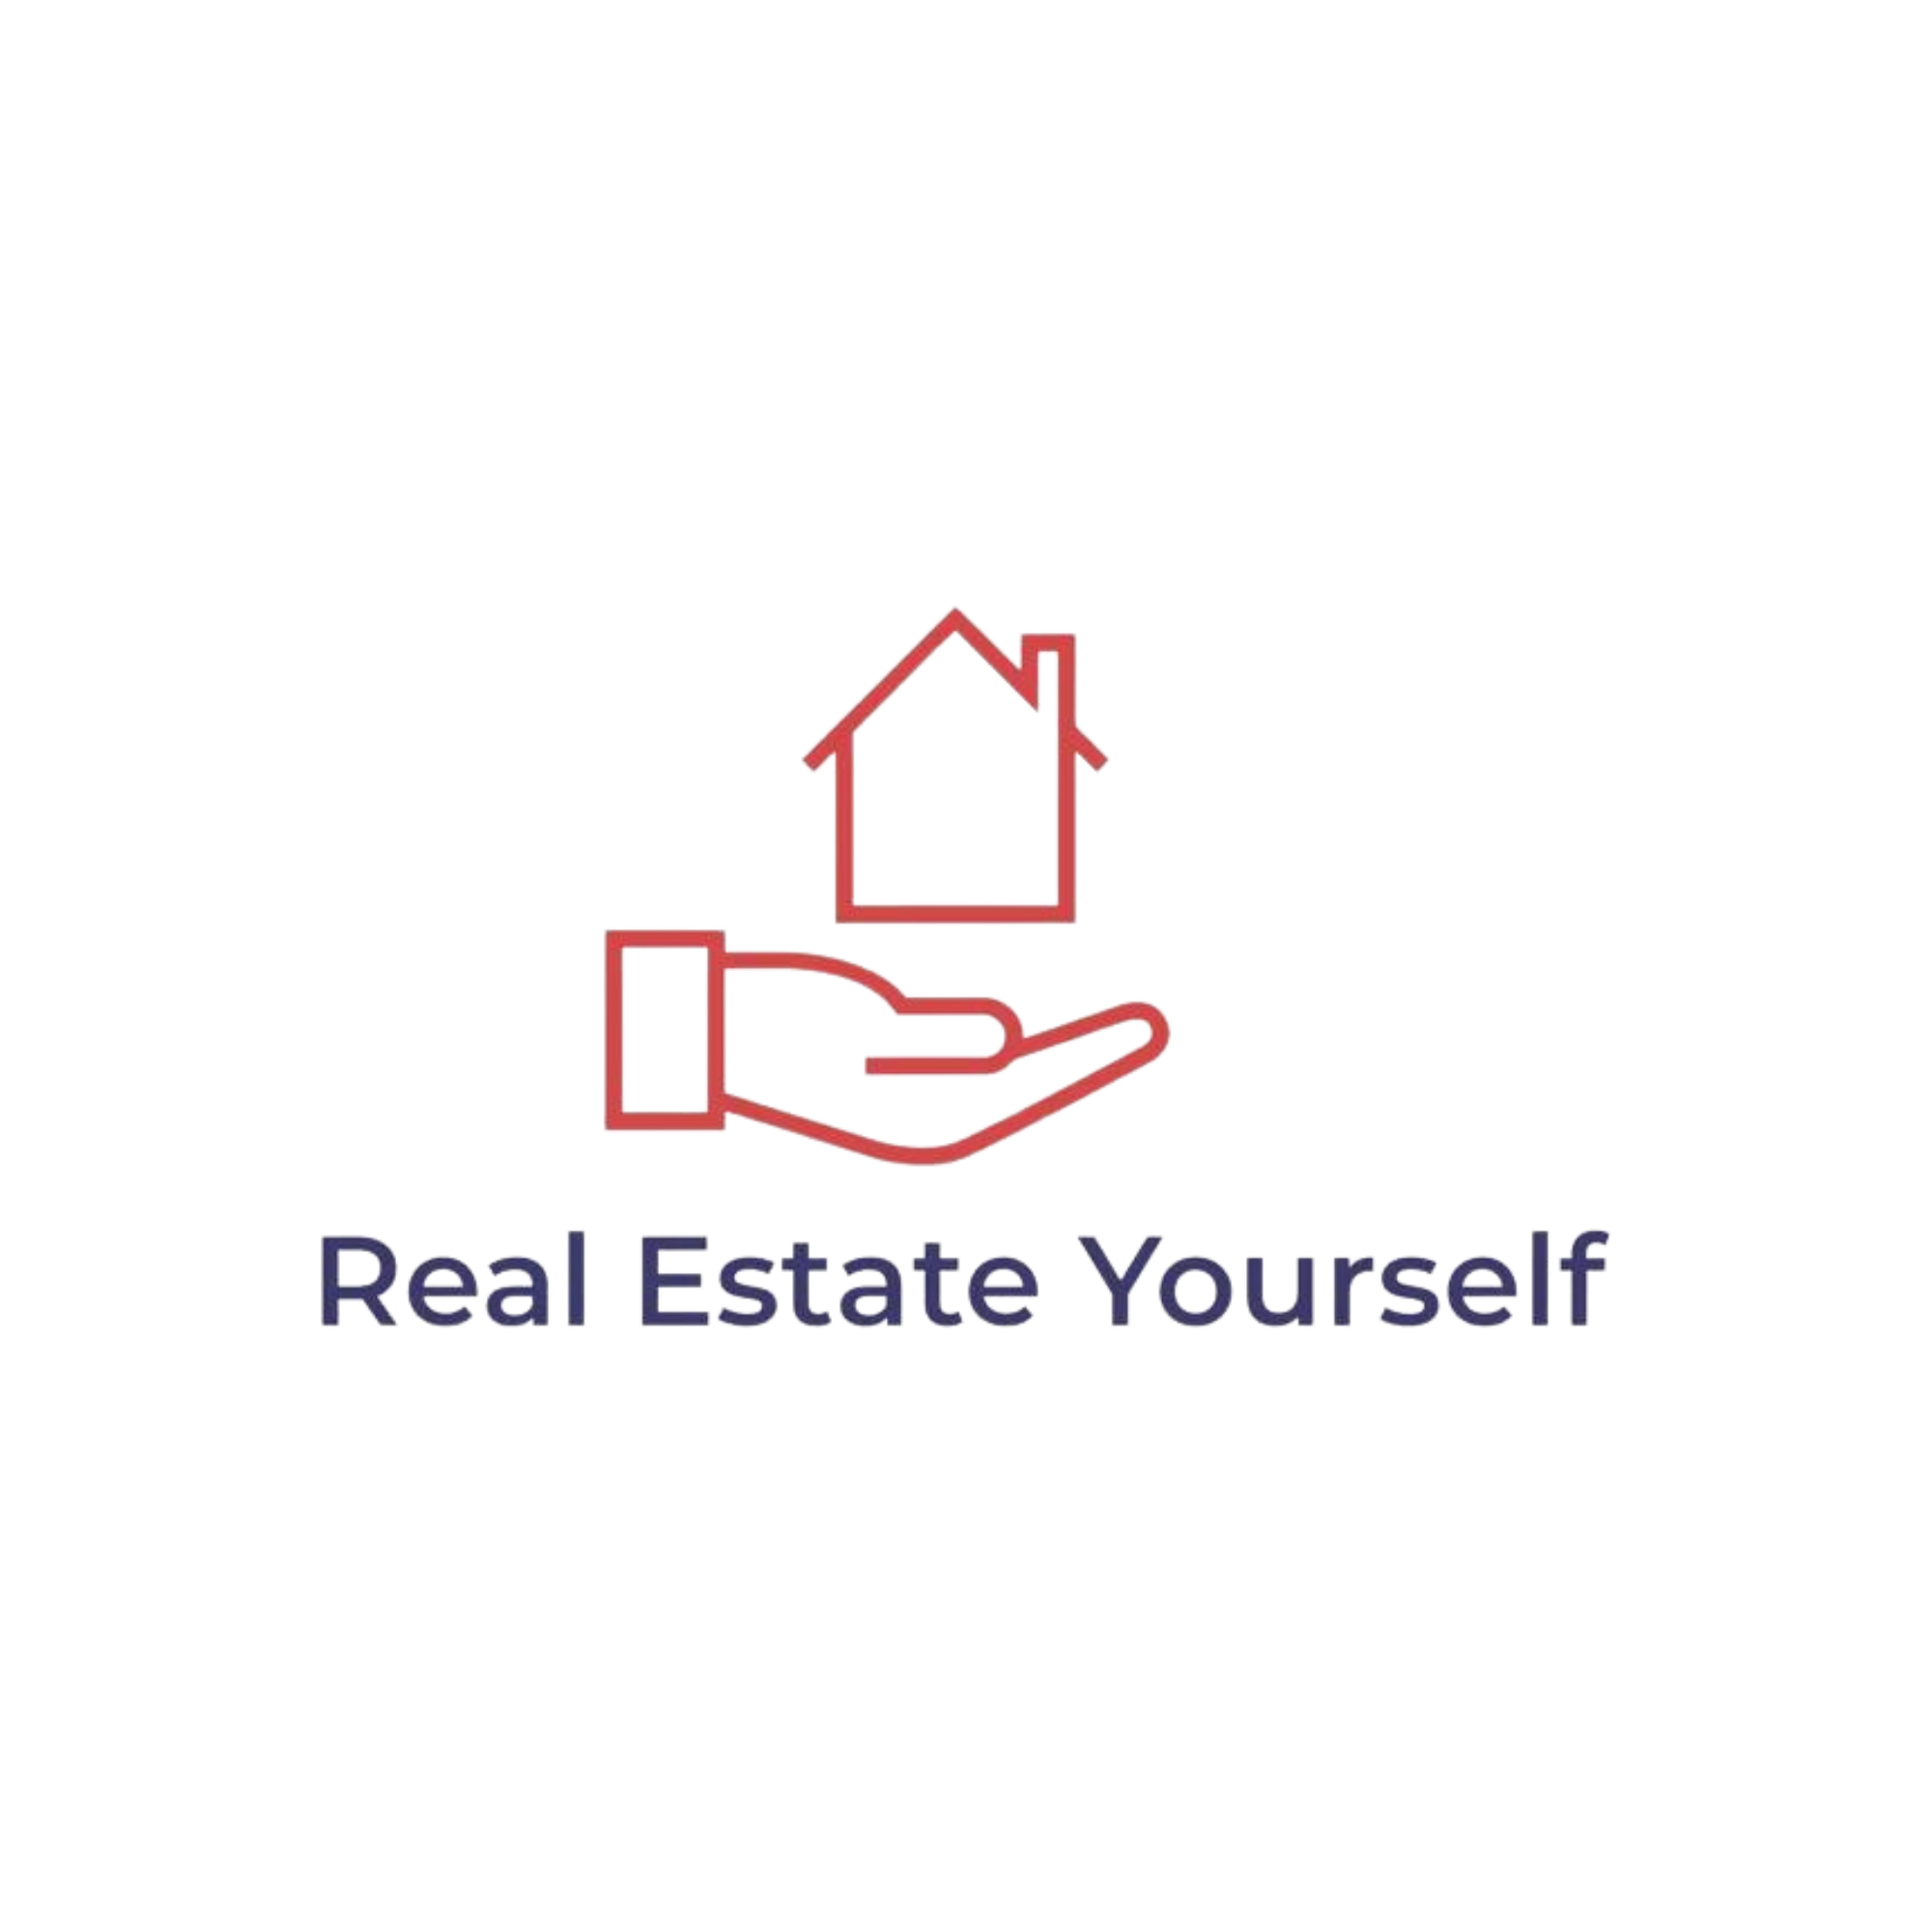 Real estate yourself no BG